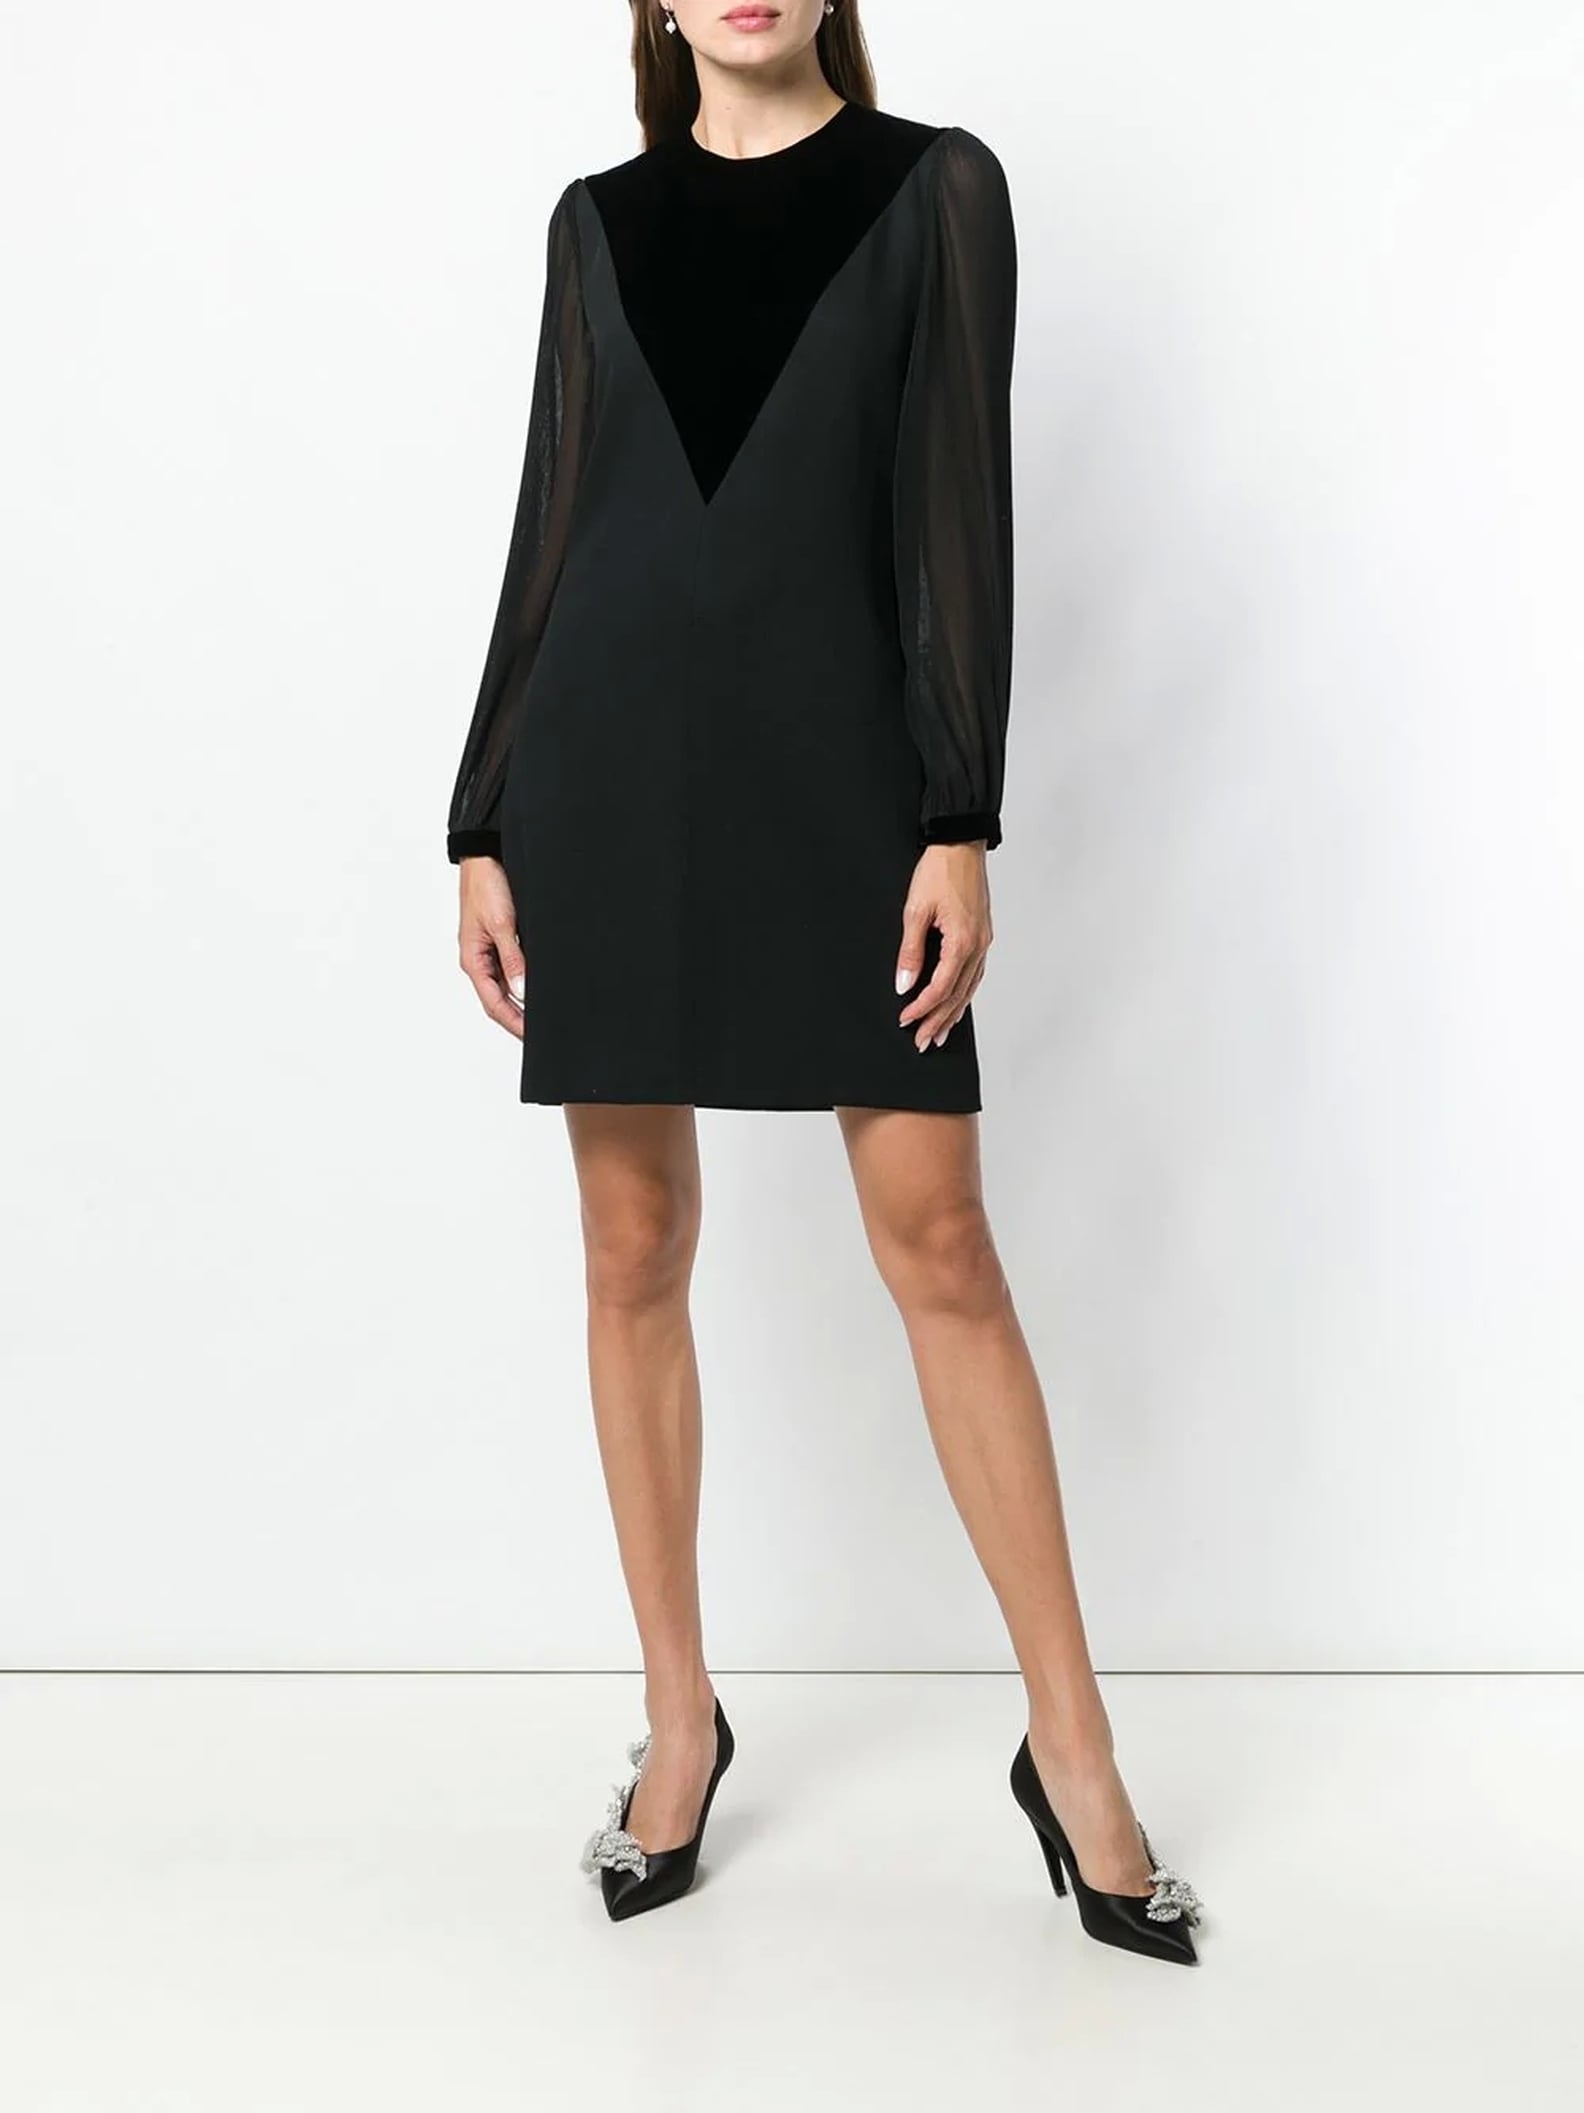 Meghan Markle Wearing Givenchy | POPSUGAR Fashion